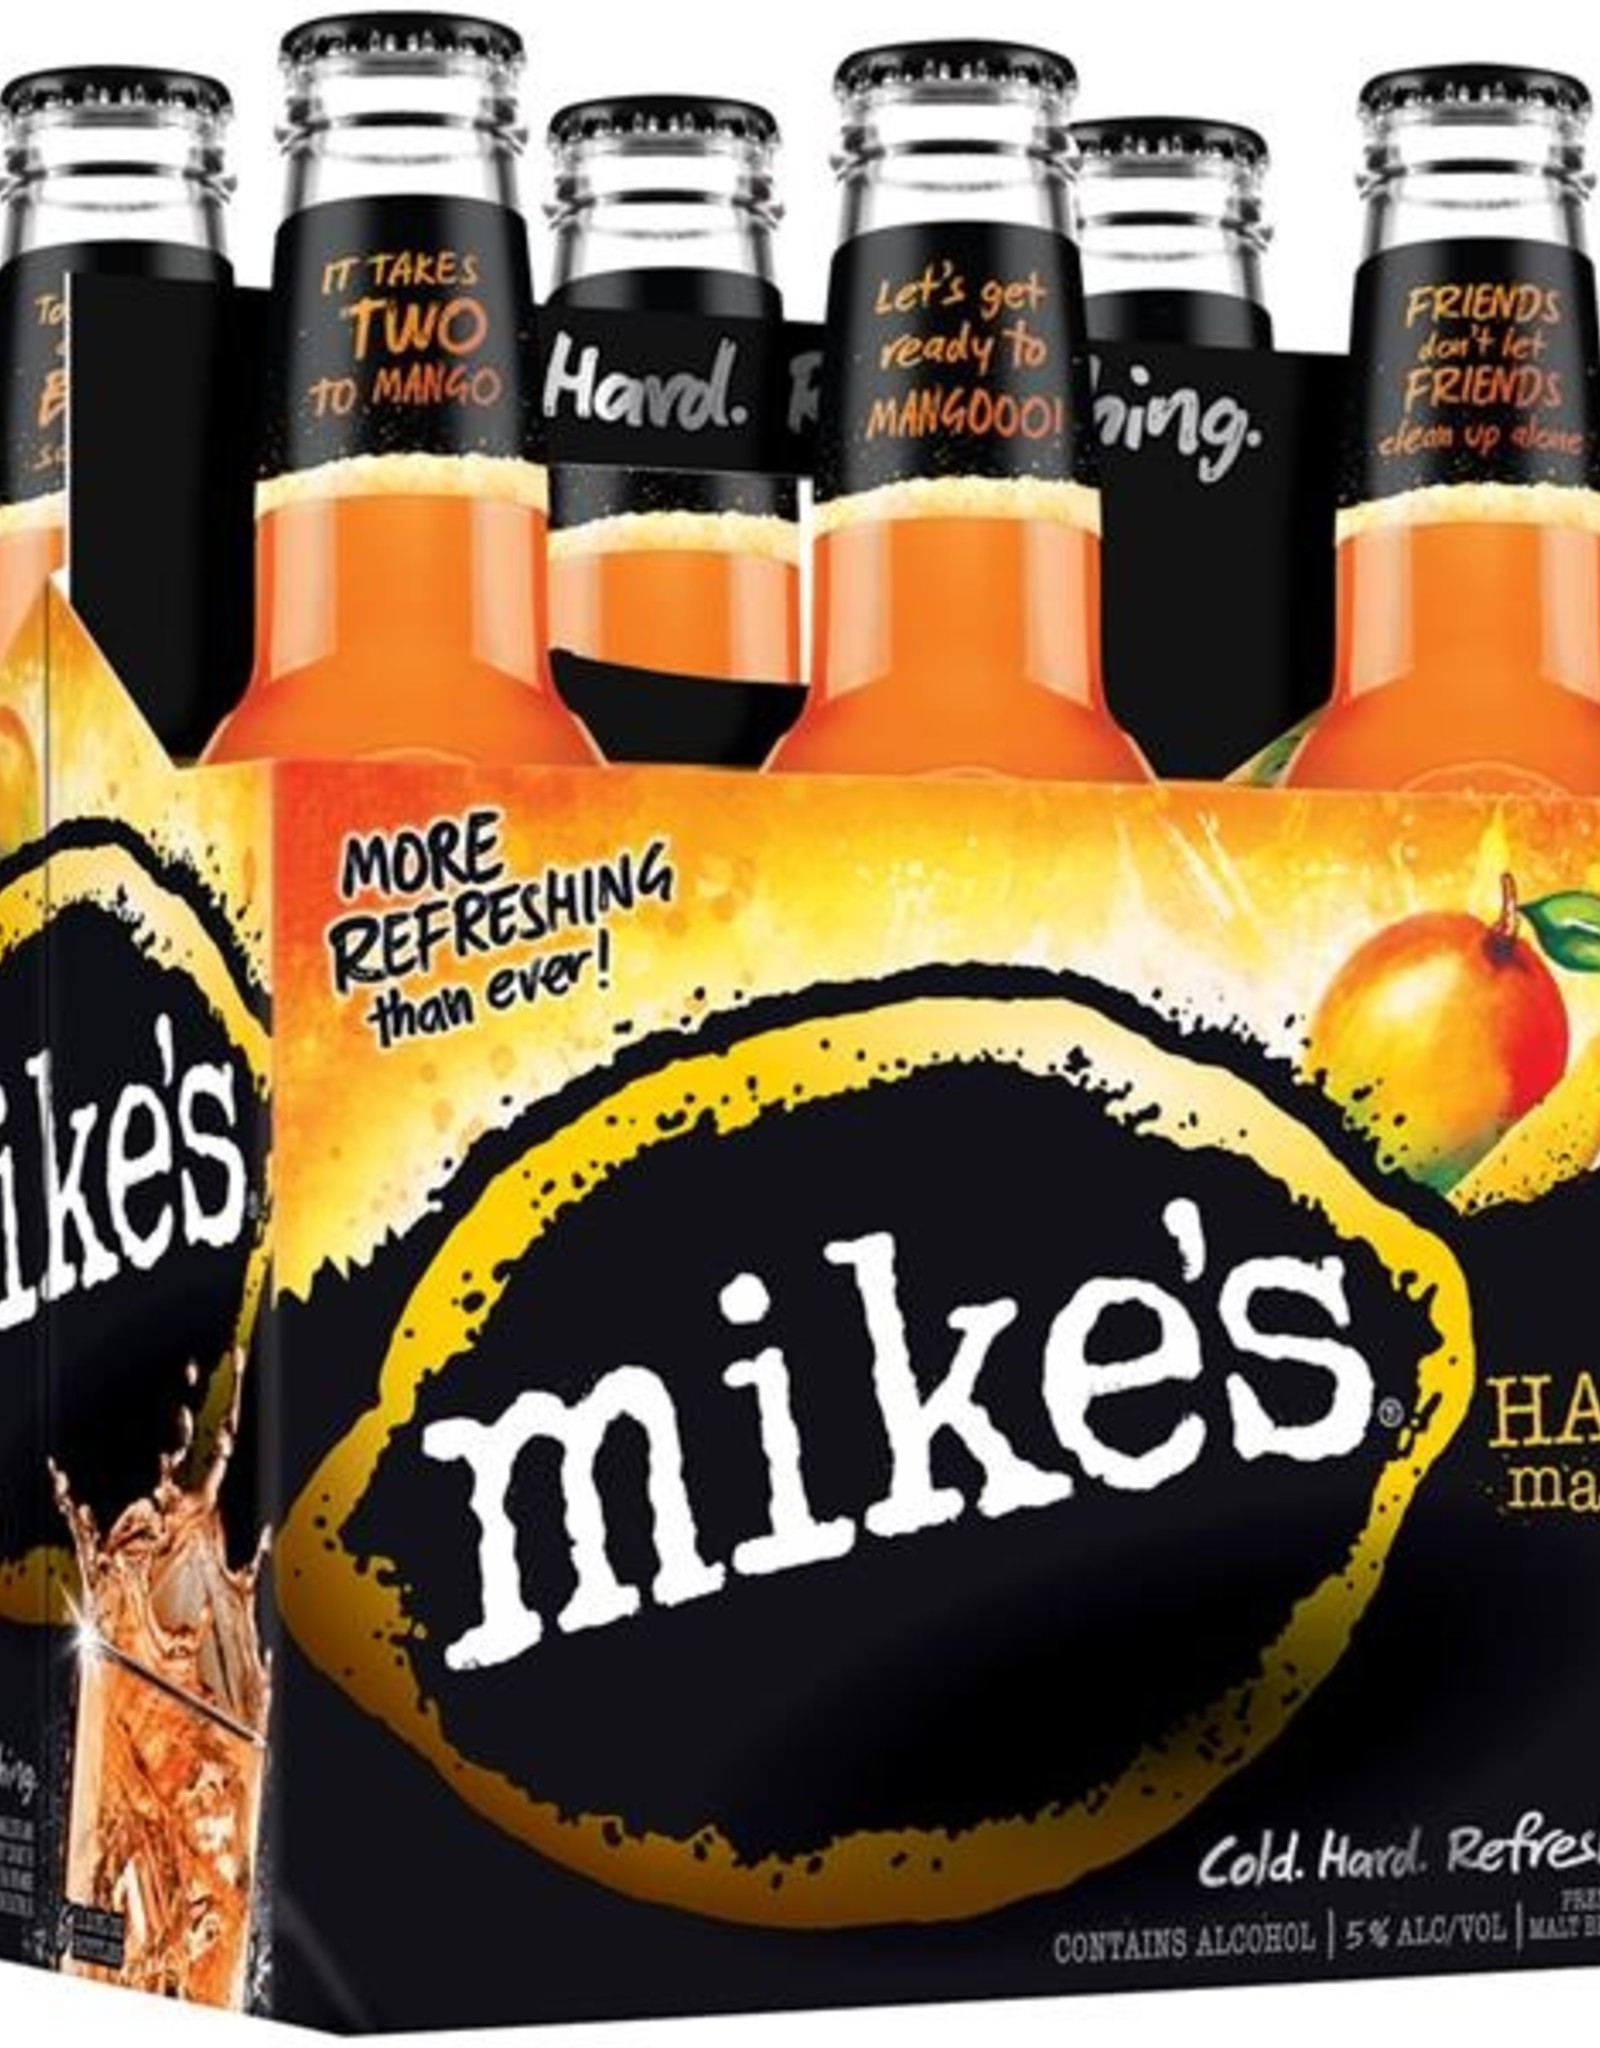 Mike's Hard Mango Lemonade 6x12 oz bottles